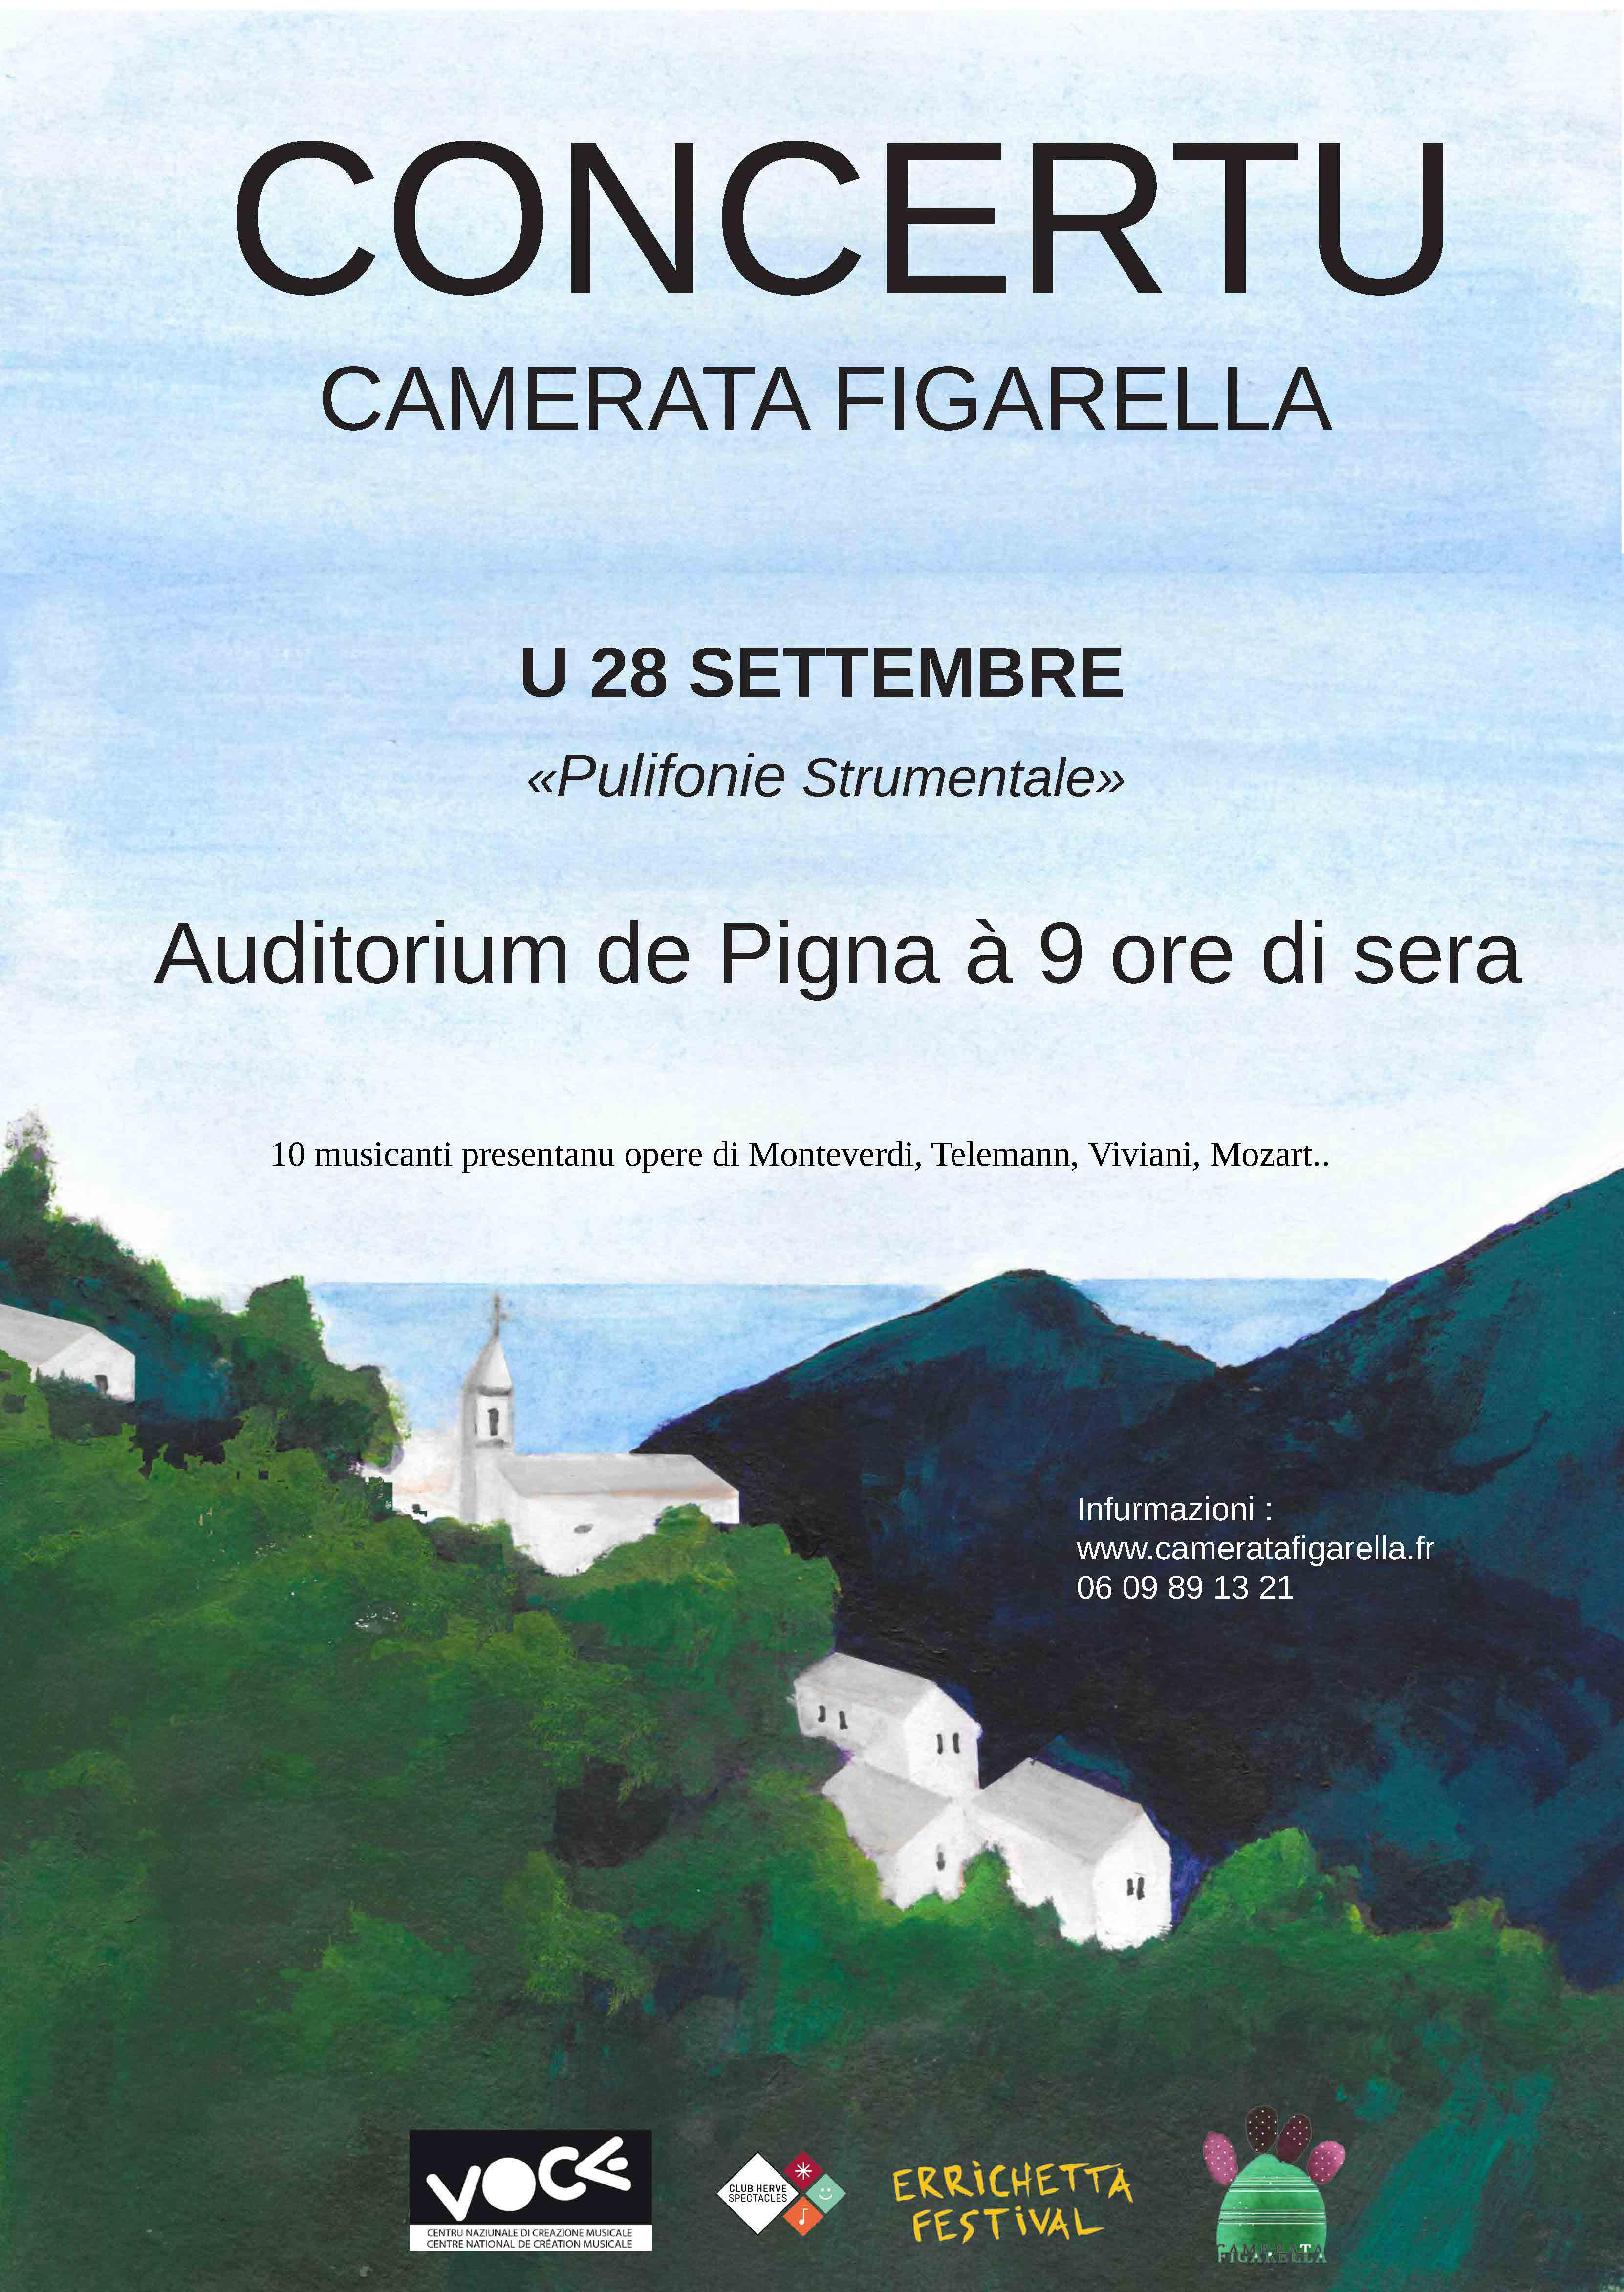 "Polifonie Strumentali" par la Camerata Figarella, le 28 septembre à Pigna